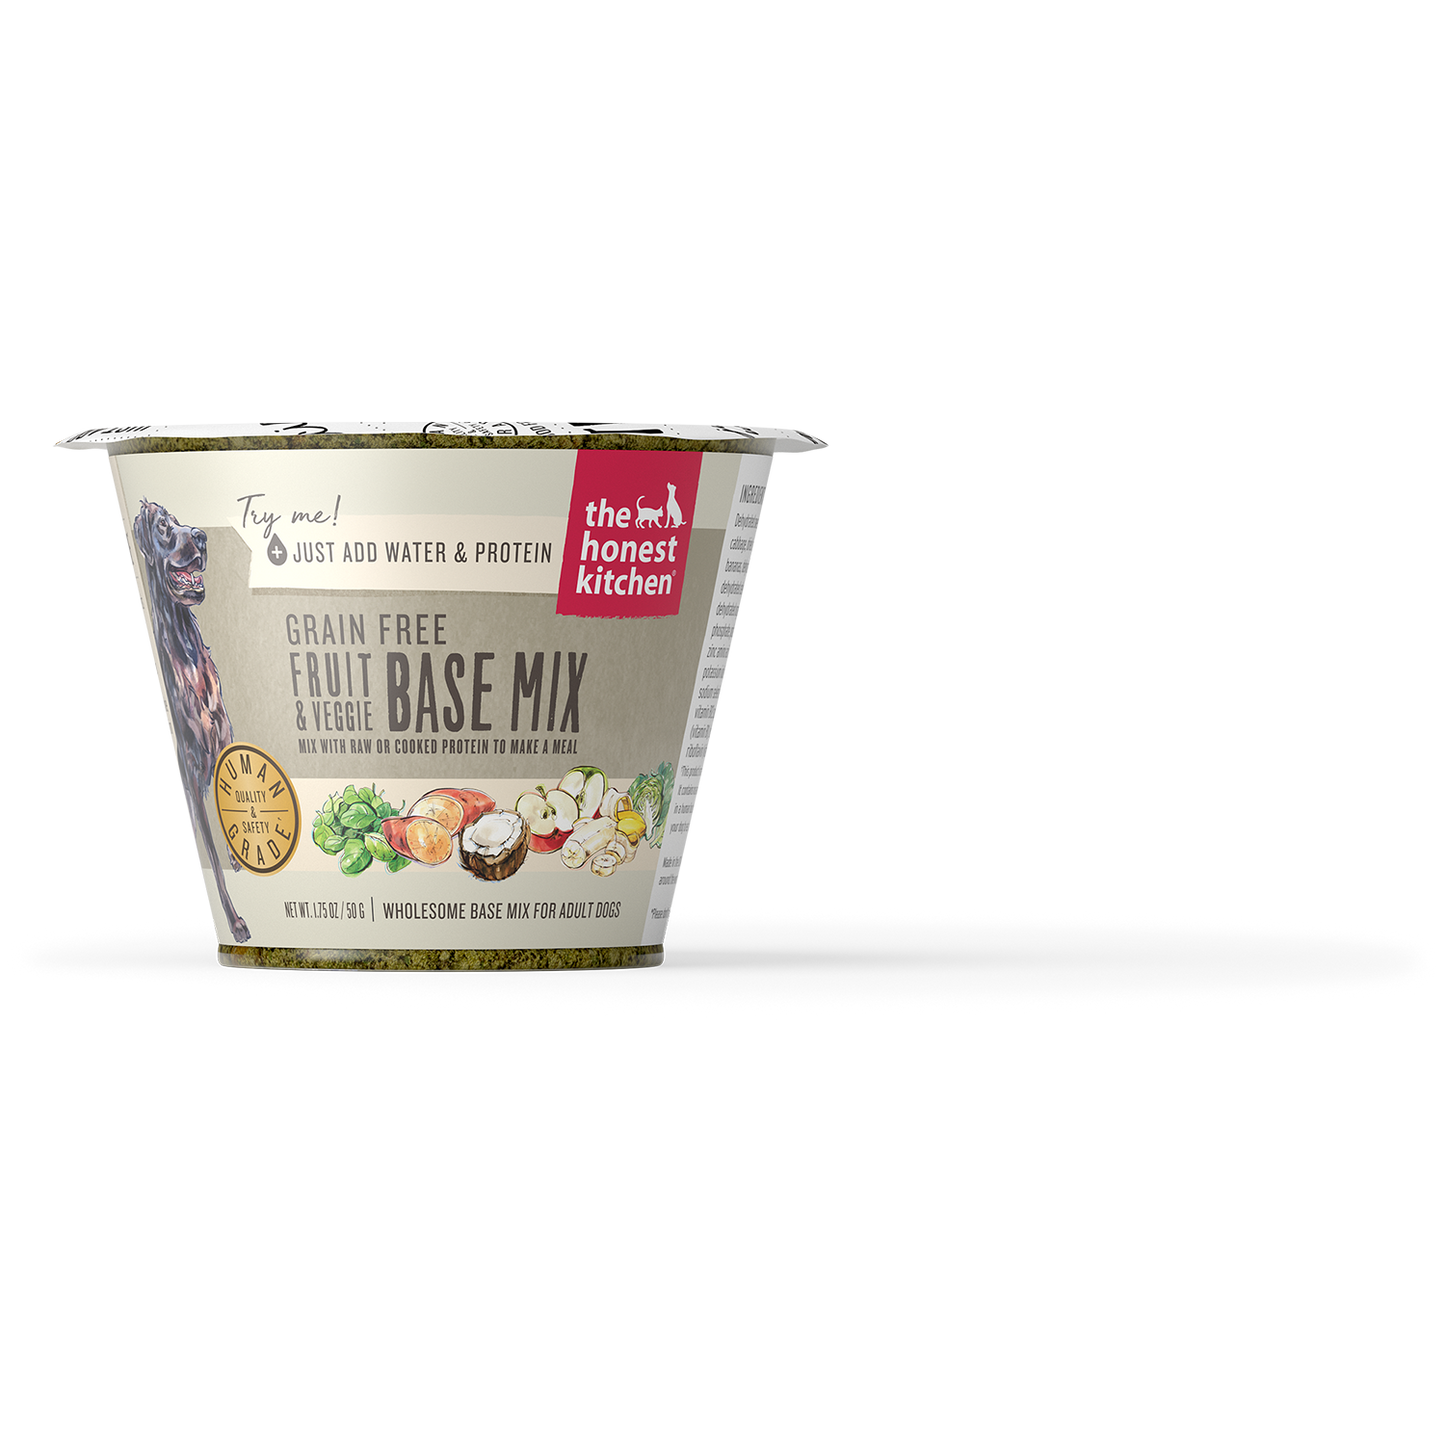 The Honest Kitchen Grain Free Dehydrated Fruit & Veggie Base Mix Dog Food